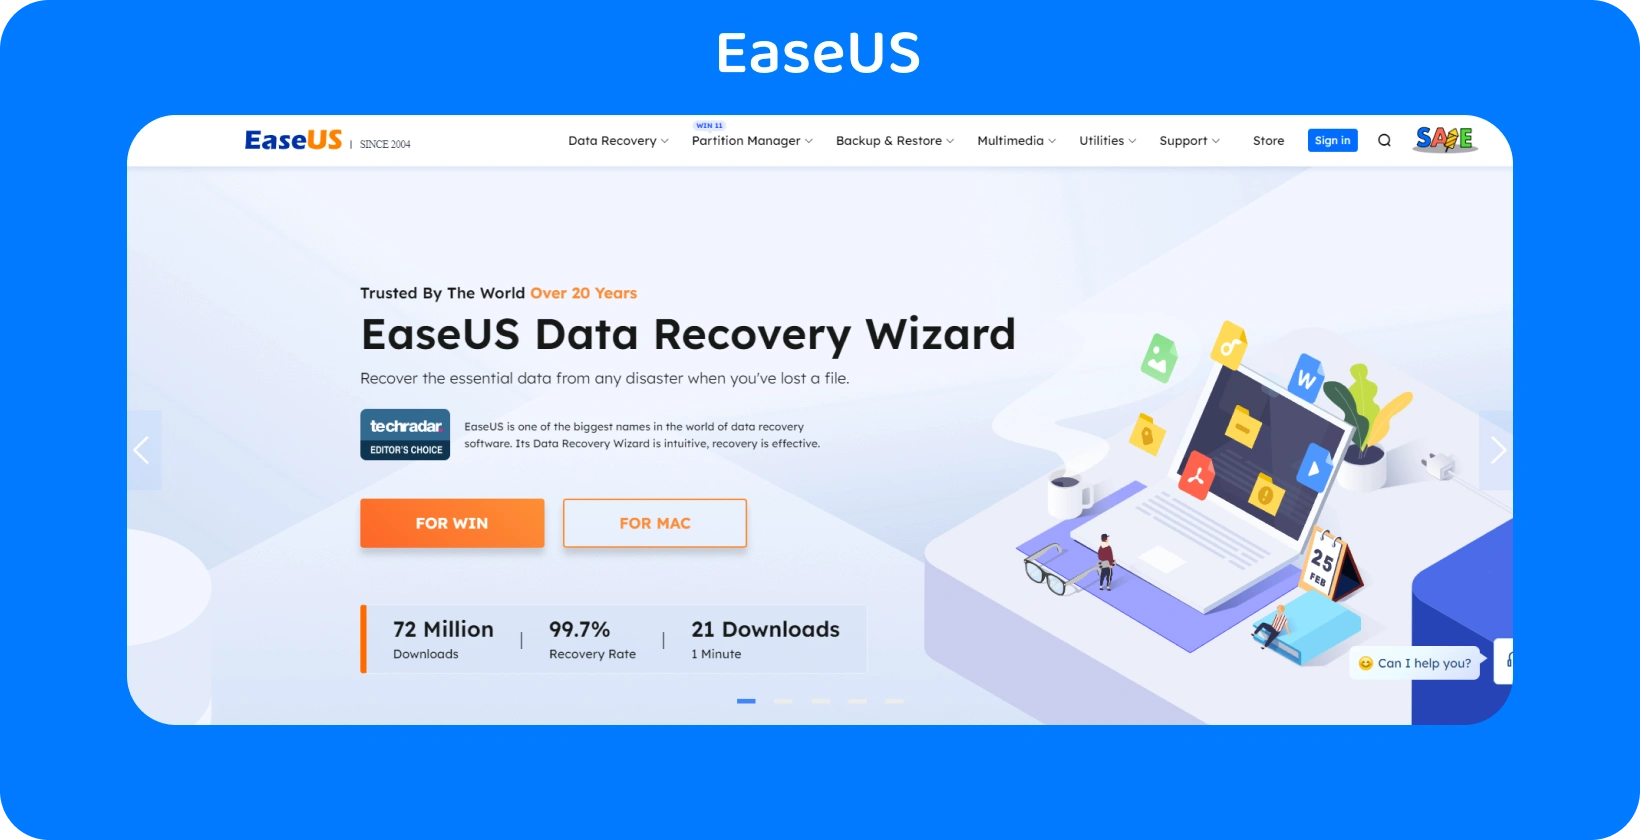 EaseUS ιστοσελίδα του Data Recovery Wizard, προσφέροντας μια αξιόπιστη λύση για την αποκατάσταση χαμένων δεδομένων με υψηλό ποσοστό ανάκτησης.